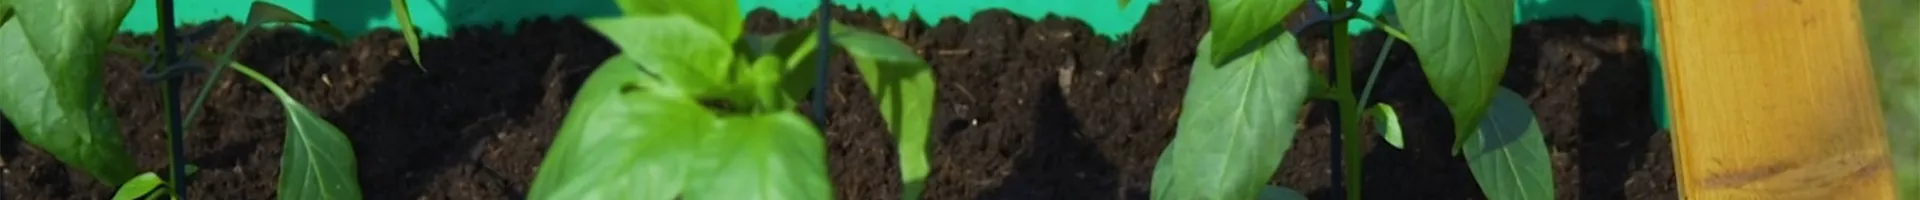 Jalapeno Paprika - Einpflanzen im Hochbeet (Thumbnail).jpg